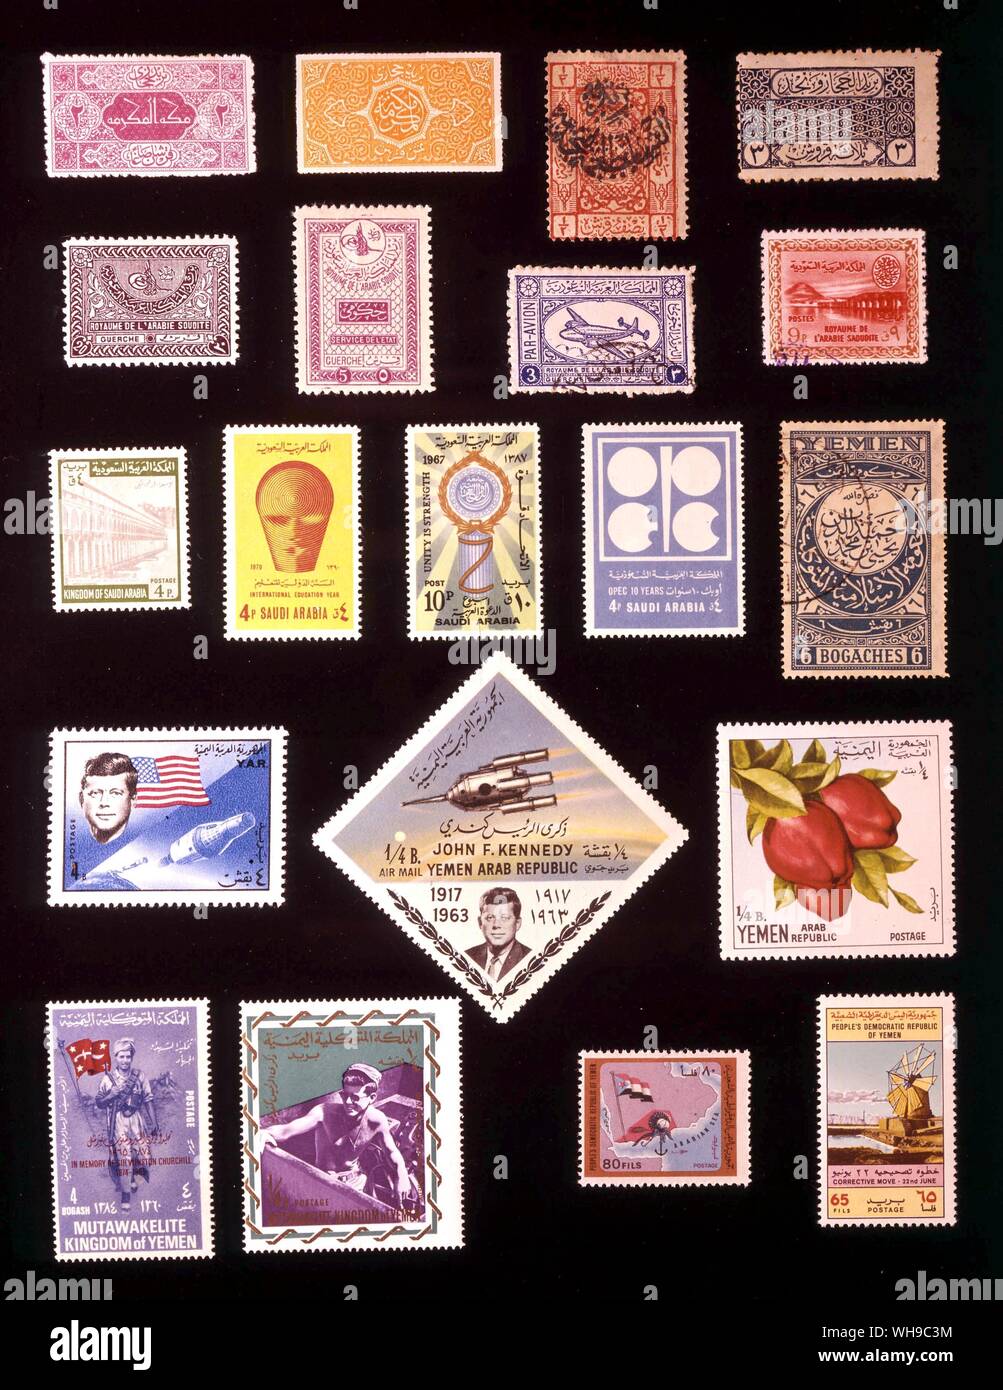 ASIA - ARABIA: (left to right) 1. Hejaz, 2 piastres, 1917, 2. Hejaz, 0.125 piastre, 1917, 3. Nejd, 0.5 piastre, 1925, 4. Hejaz-Nejd, 3 piastres, 1926, 5. Saudi Arabia, 5 guerches, 1939, 7. Saudi Arabia, 3 guerches, 1949, 8. Saudi Arabia, 9 piastres, 1960, 9. Saudi Arabia, 4 piastres, 1968, 10. Saudi Arabia, 4 piastres, 1971, 11. Saudi Arabia, 10 piastres, 1971, 12. Saudi Arabia, 4 piastres, 1971, 13. Yemen, 6 bogaches,1930, 14. Yemen Arab Republic, 4 bogaches, 1965, 15. Yemen Arab Republic, .25 bogache, 1964, 16. Yemen Arab Republic, 0.25 bogache, 1967, 17. Mutawakelite Kingdom of Yemen, 4 Stock Photo